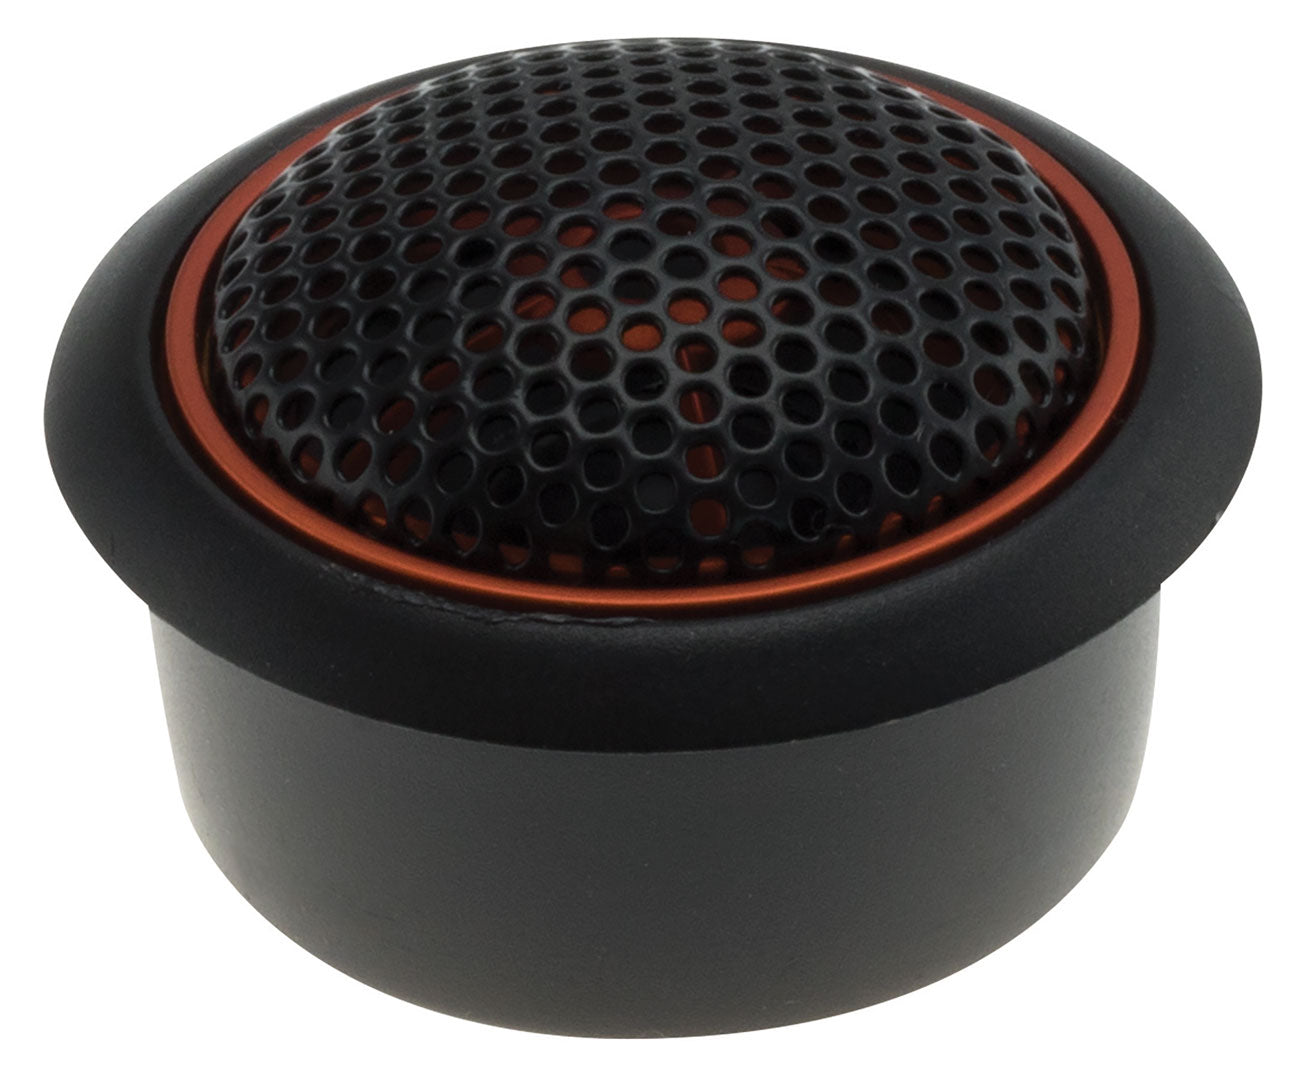 EDST215C-E6 | EDGE Street Series 5.25 inch 120 watts Component Speakers - Pair